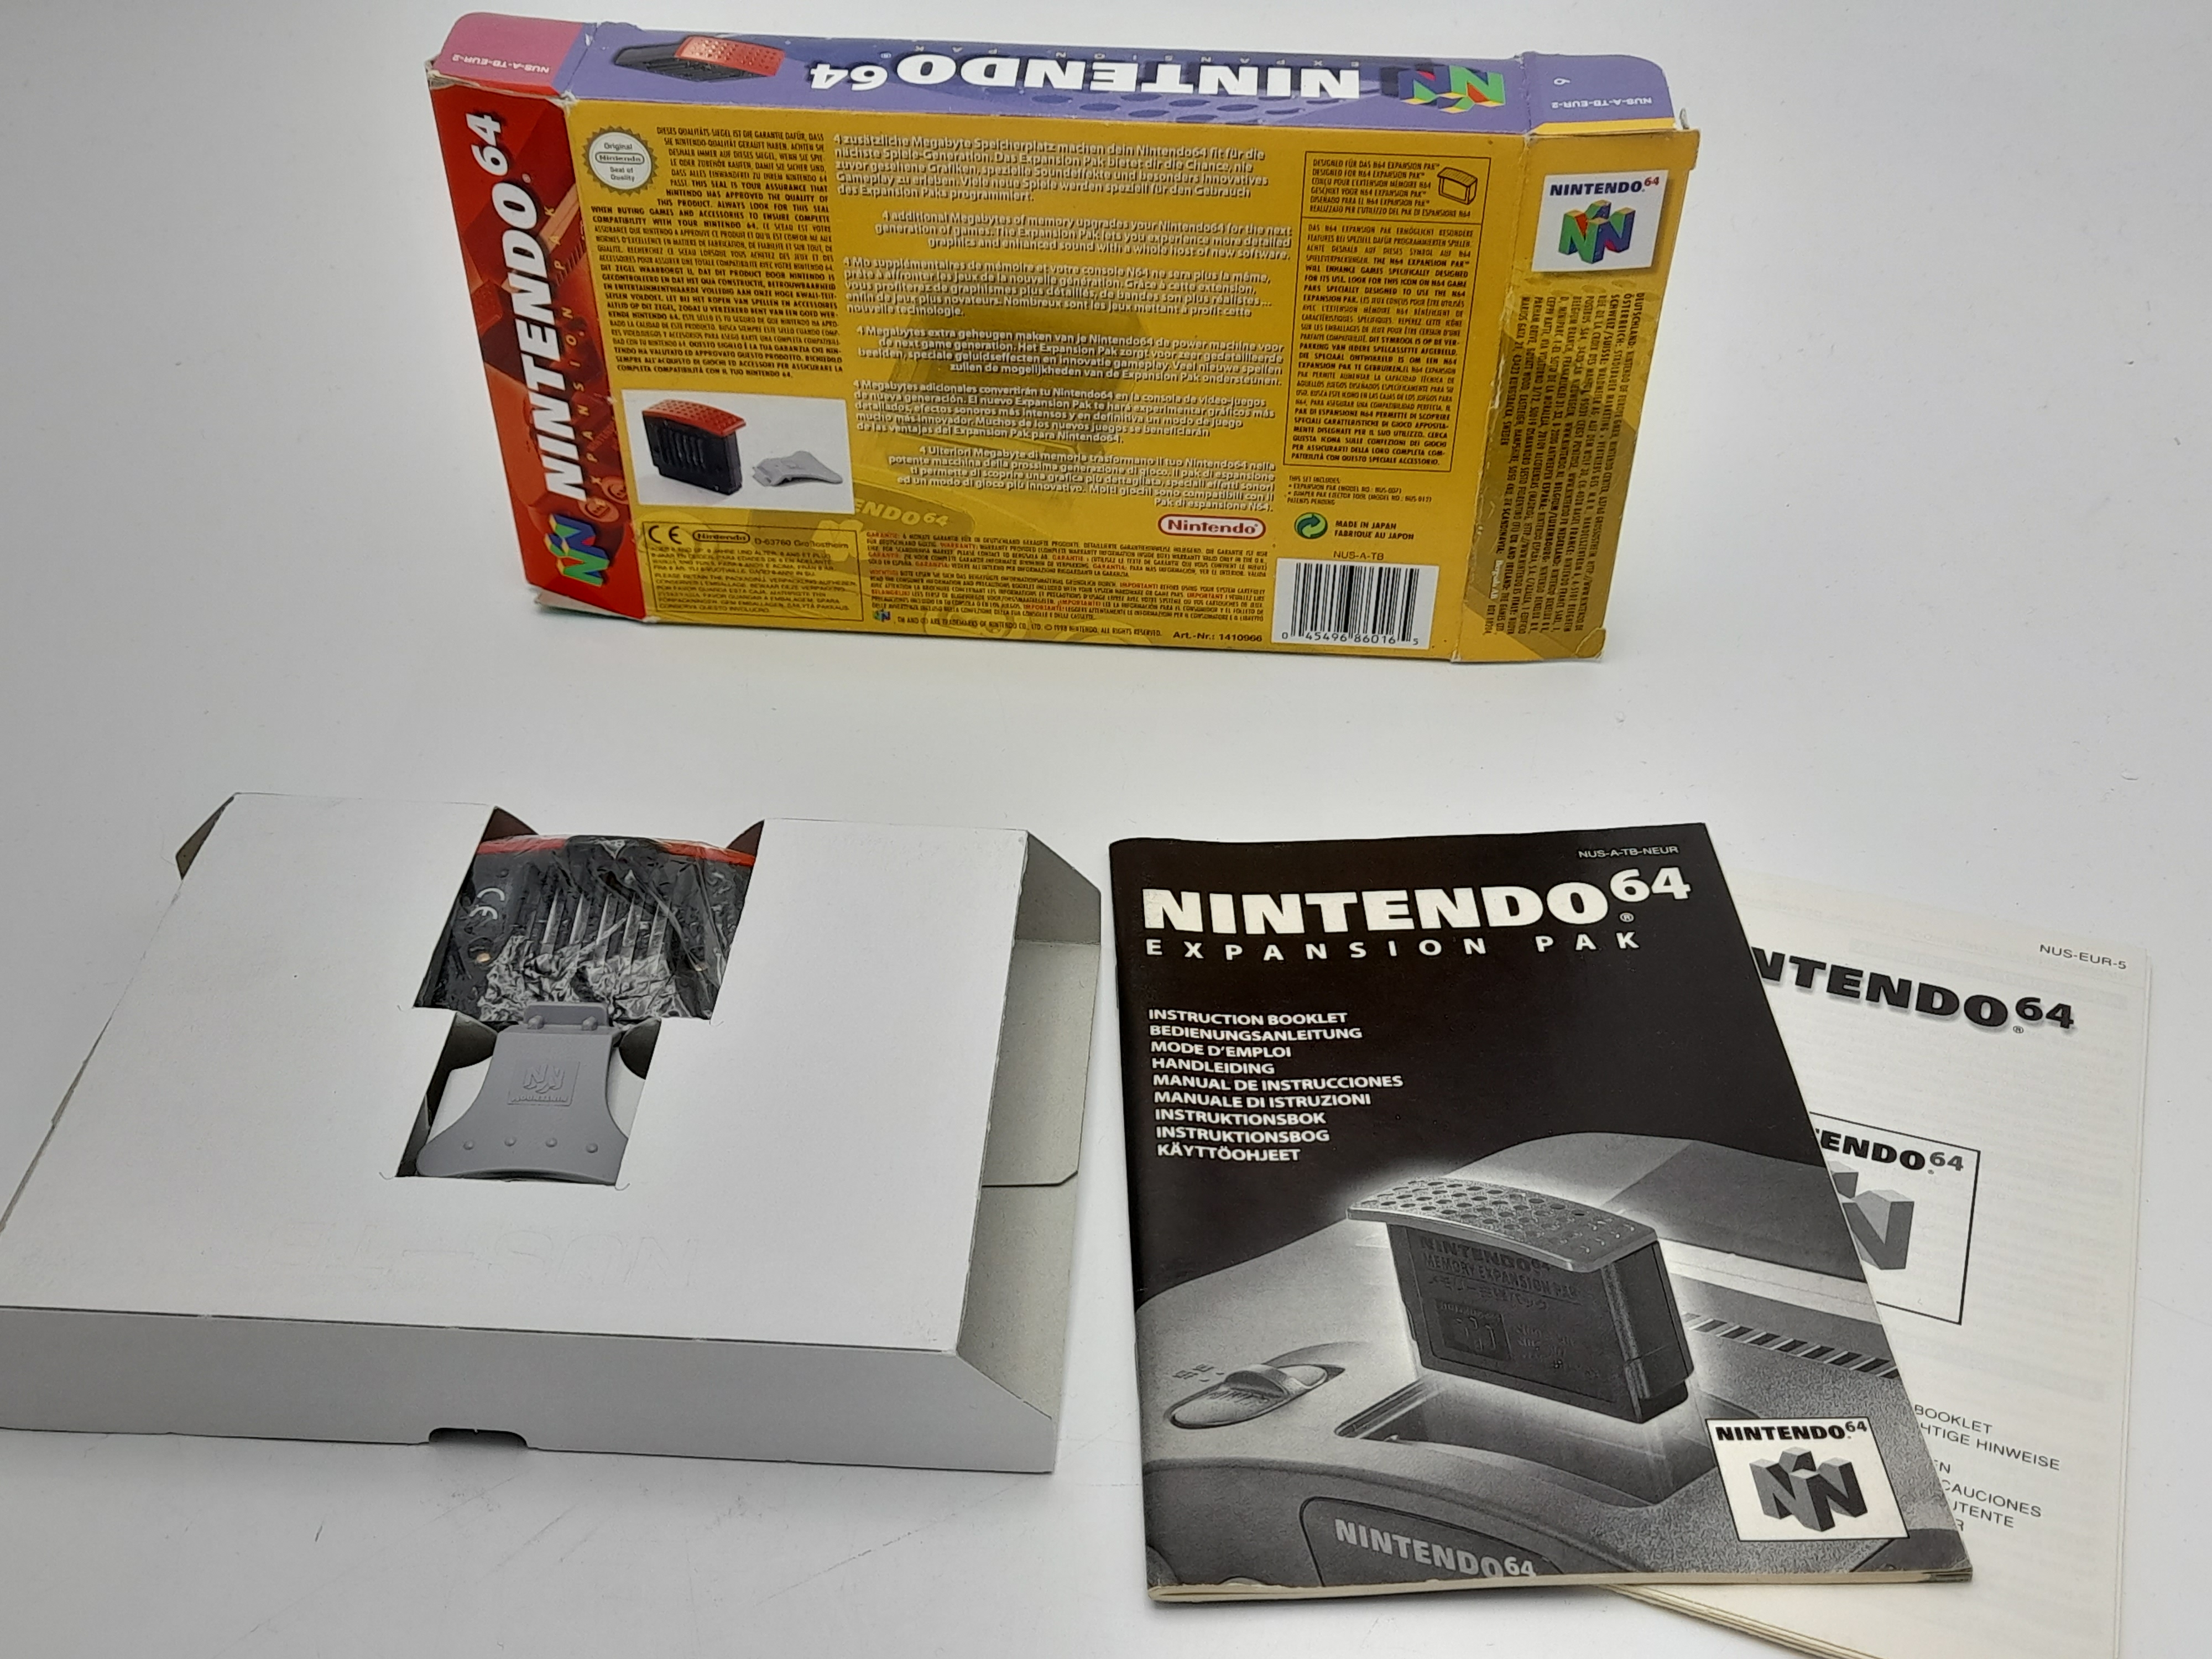 Foto van Nintendo 64 Expansion Pak in Doos